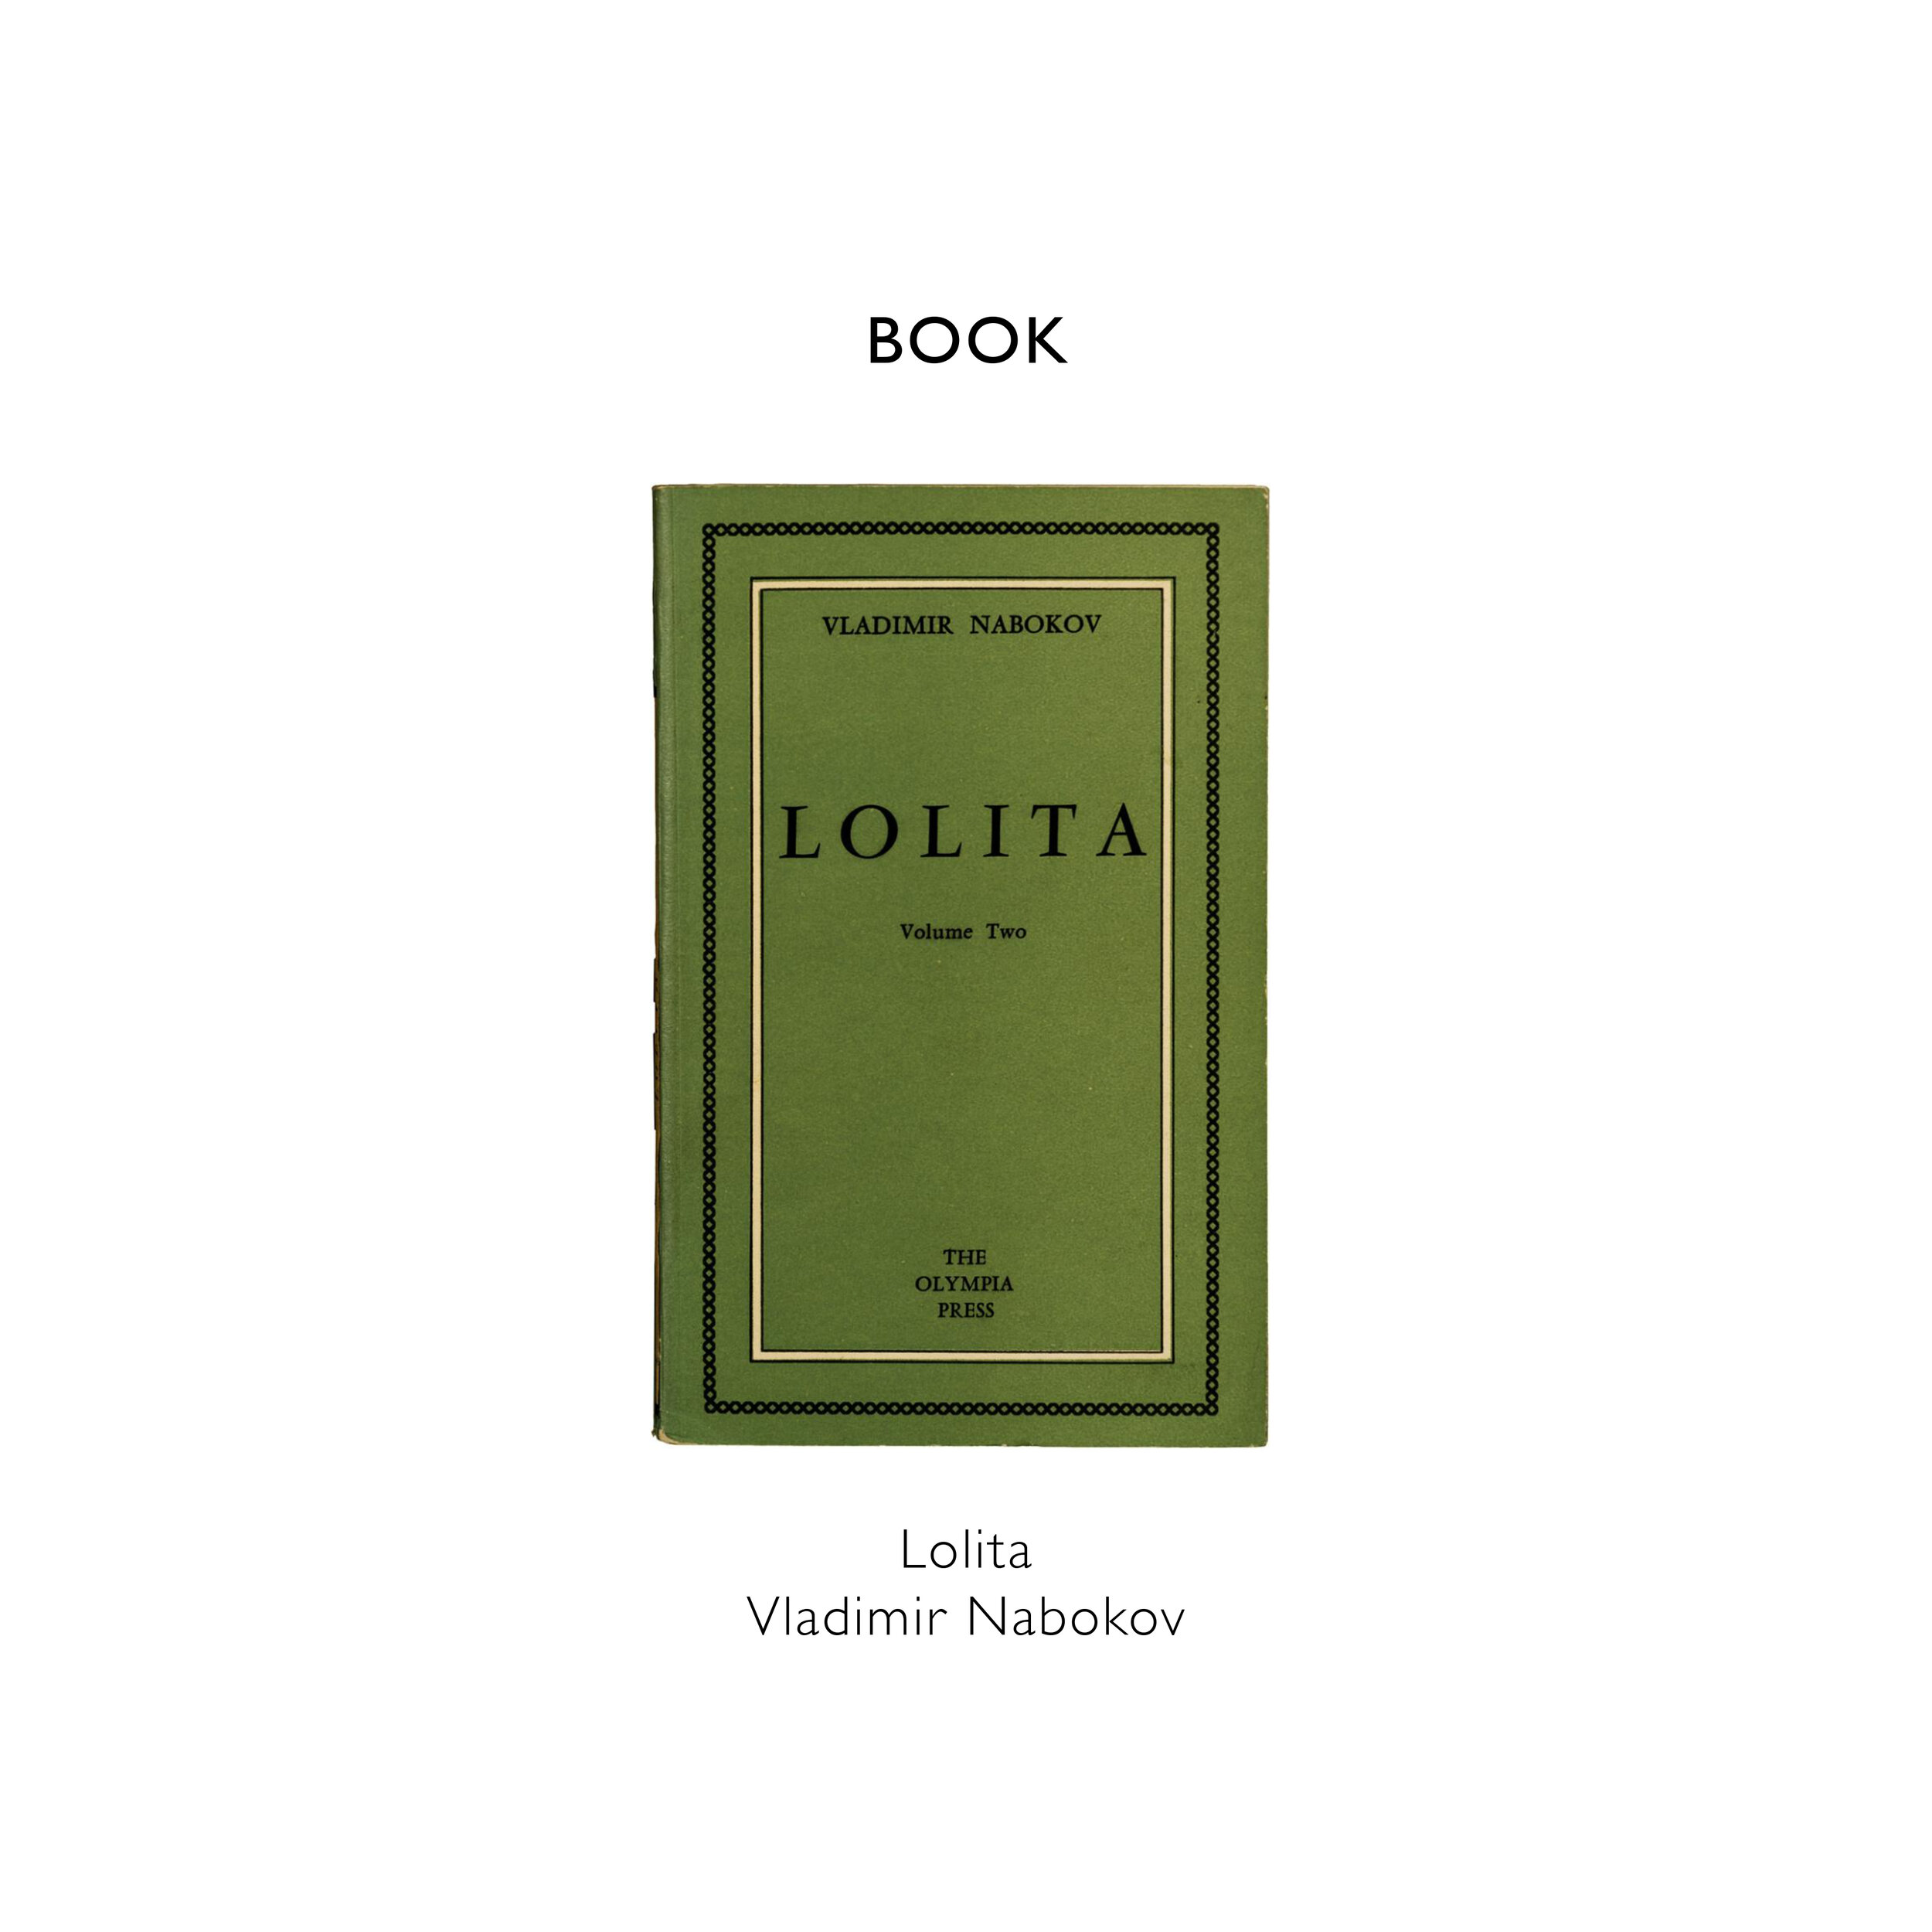 REFERENCE BLOG TEMPLATE Lolita Vladimir Nabokov  copy.jpg